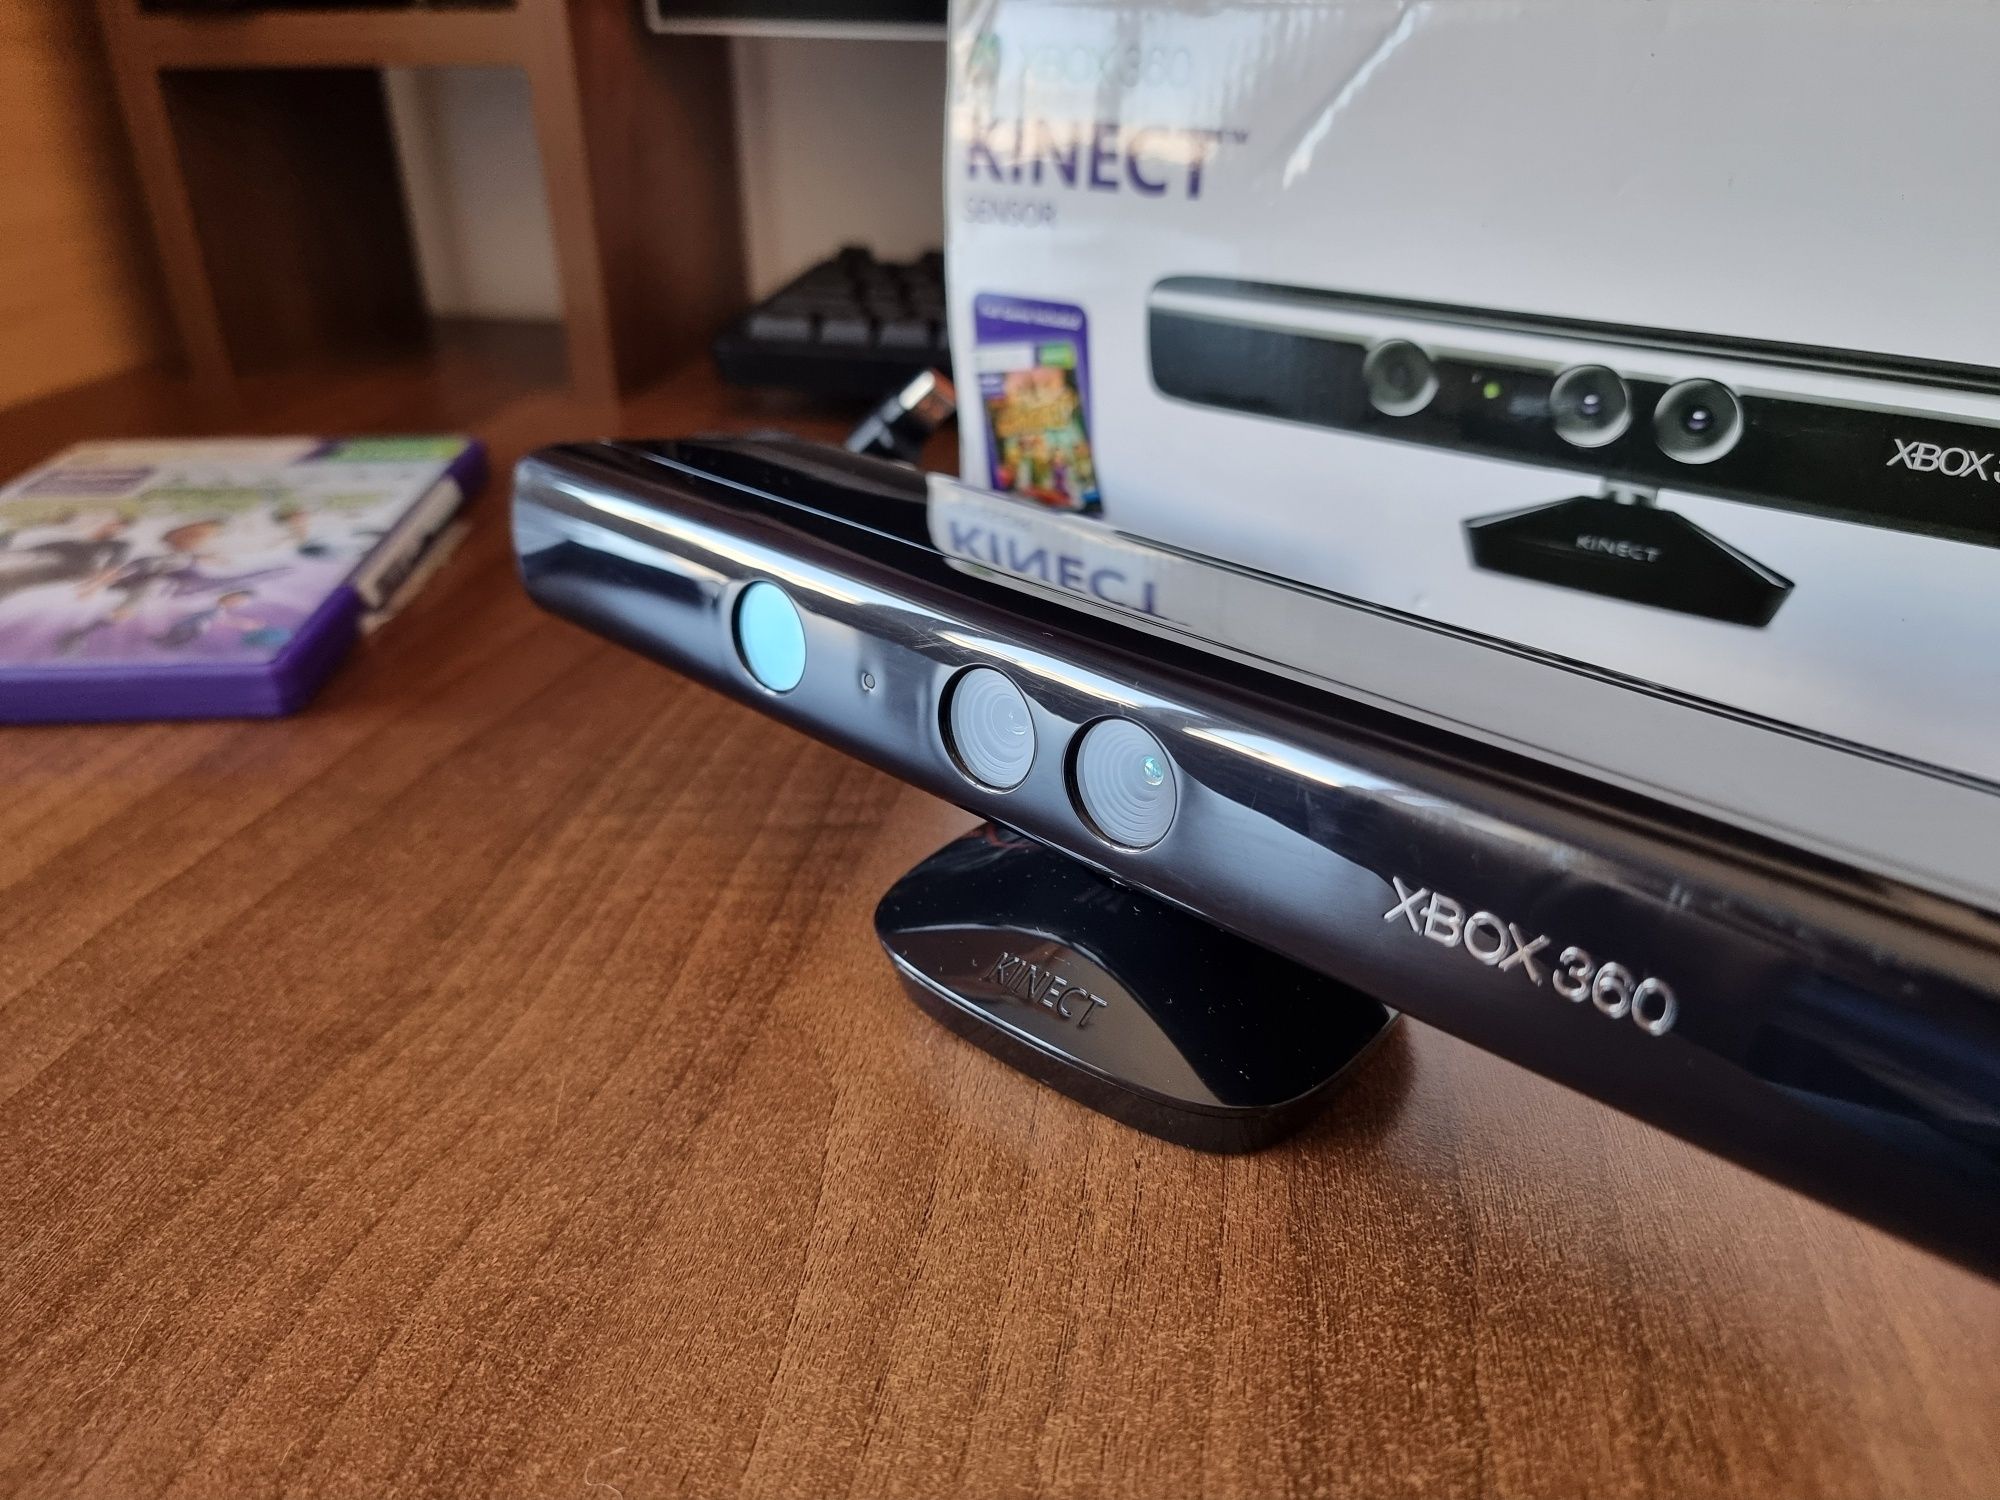 Senzor kinect pentru Xbox 360